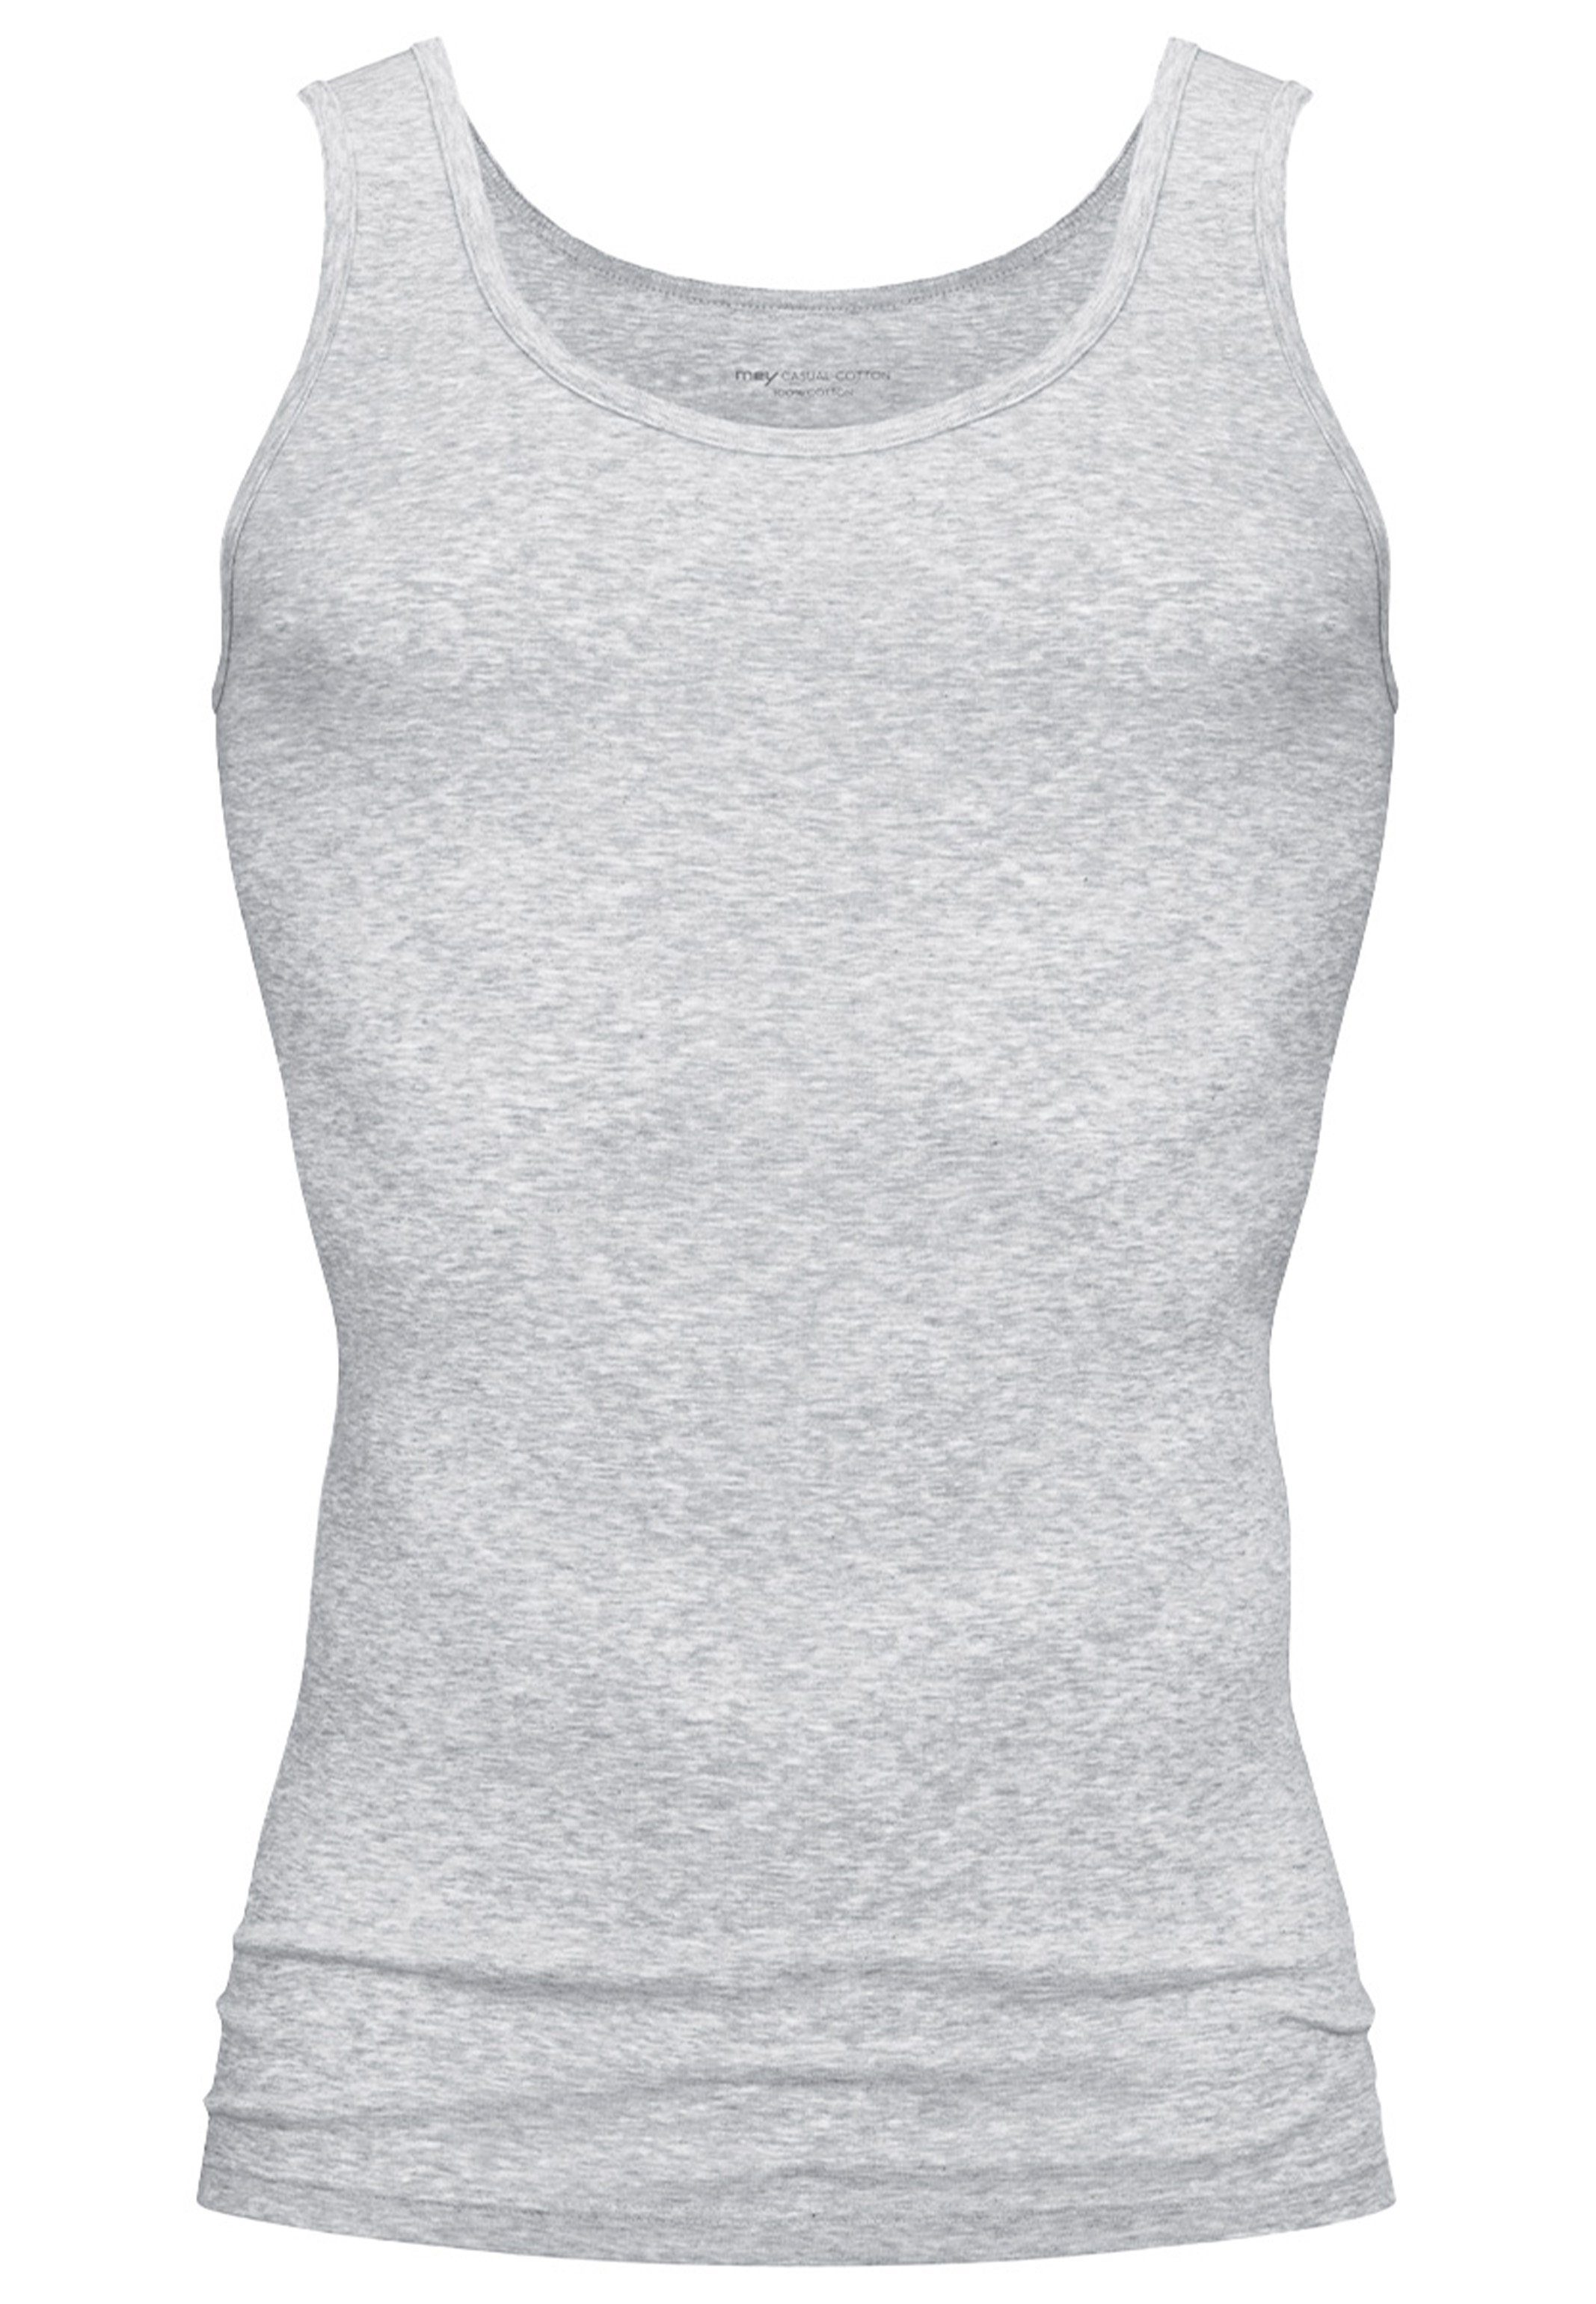 Tanktop Baumwolle - Cotton / melange Light Unterhemd - Mey Unterhemd Casual grey (1-St)